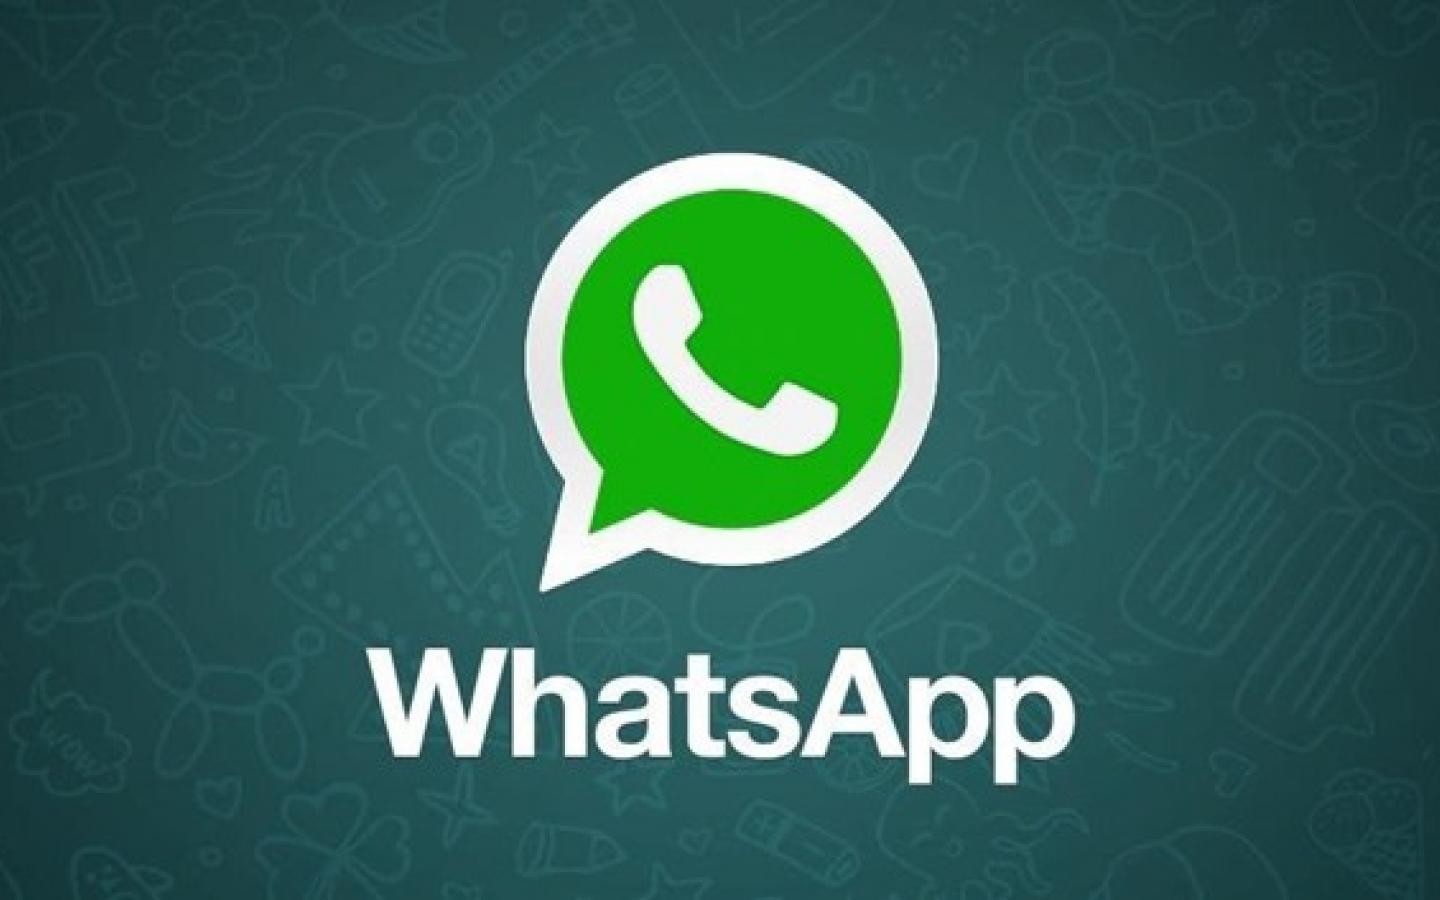 Indian WhatsApp groups found spreading child pornography